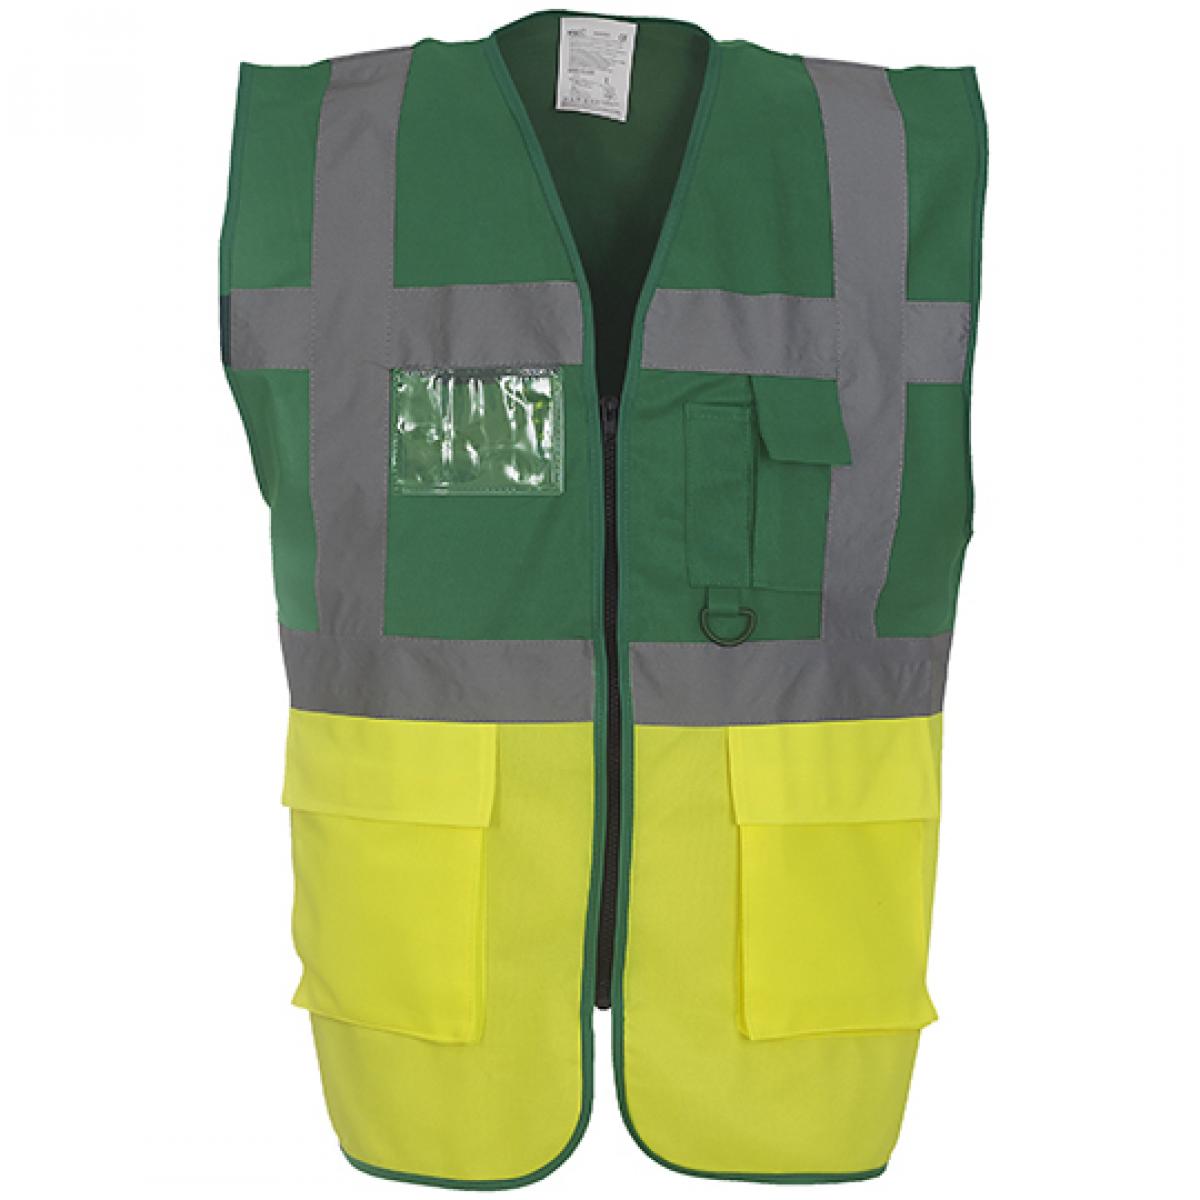 Hersteller: YOKO Herstellernummer: HVW801 Artikelbezeichnung: Herren Multi-Functional Executive Waistcoat Farbe: Paramedic Green/Hi-Vis Yellow